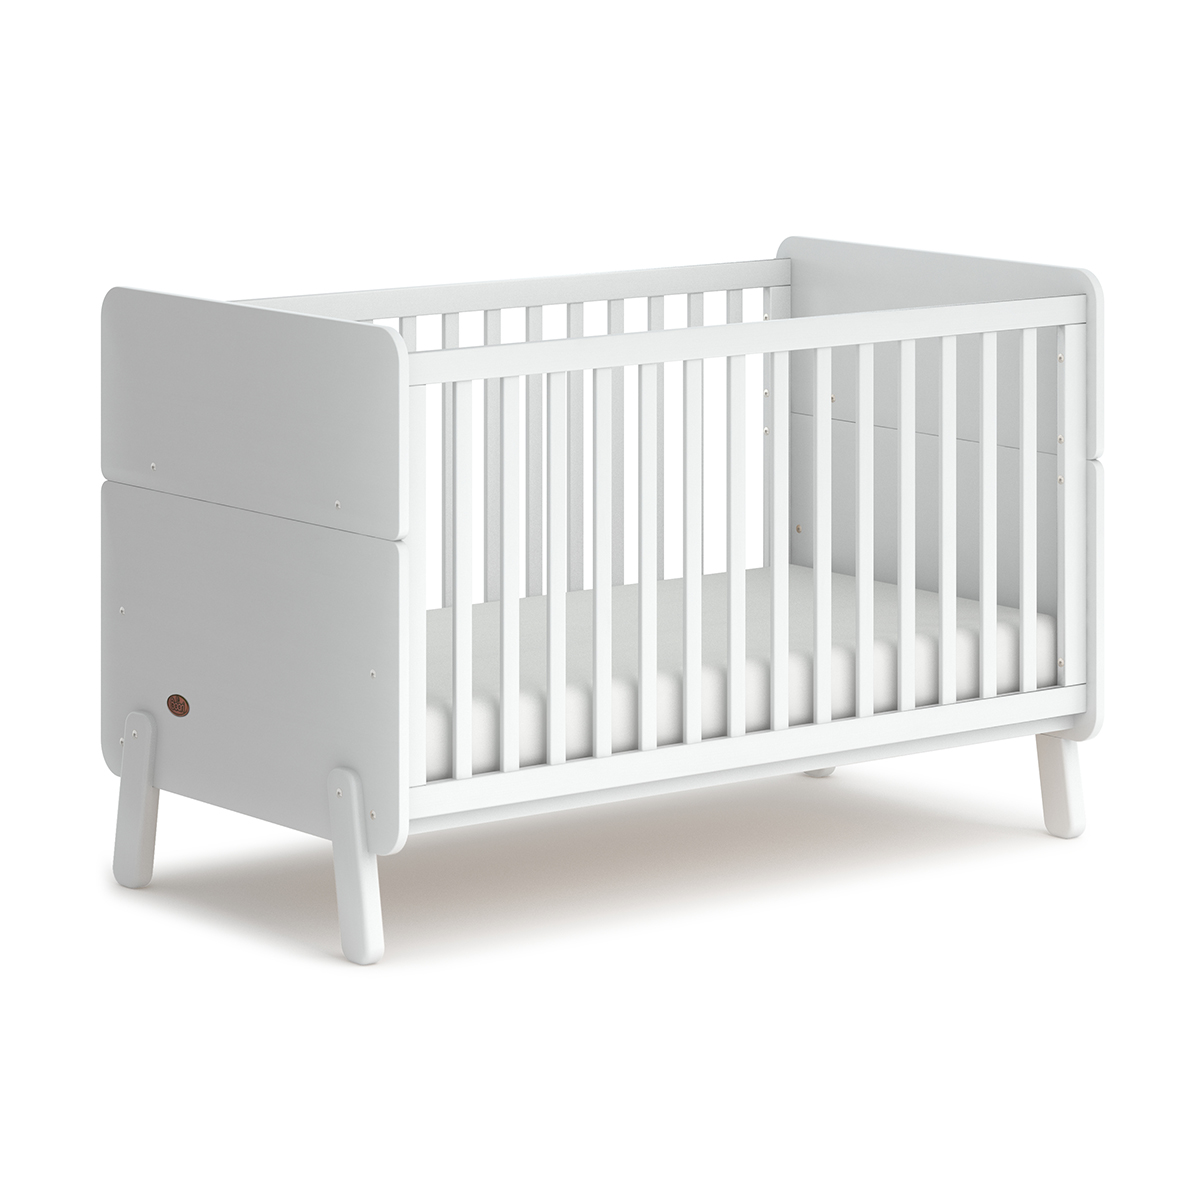 Hot sale multipurpose wooden baby cot (8).jpg